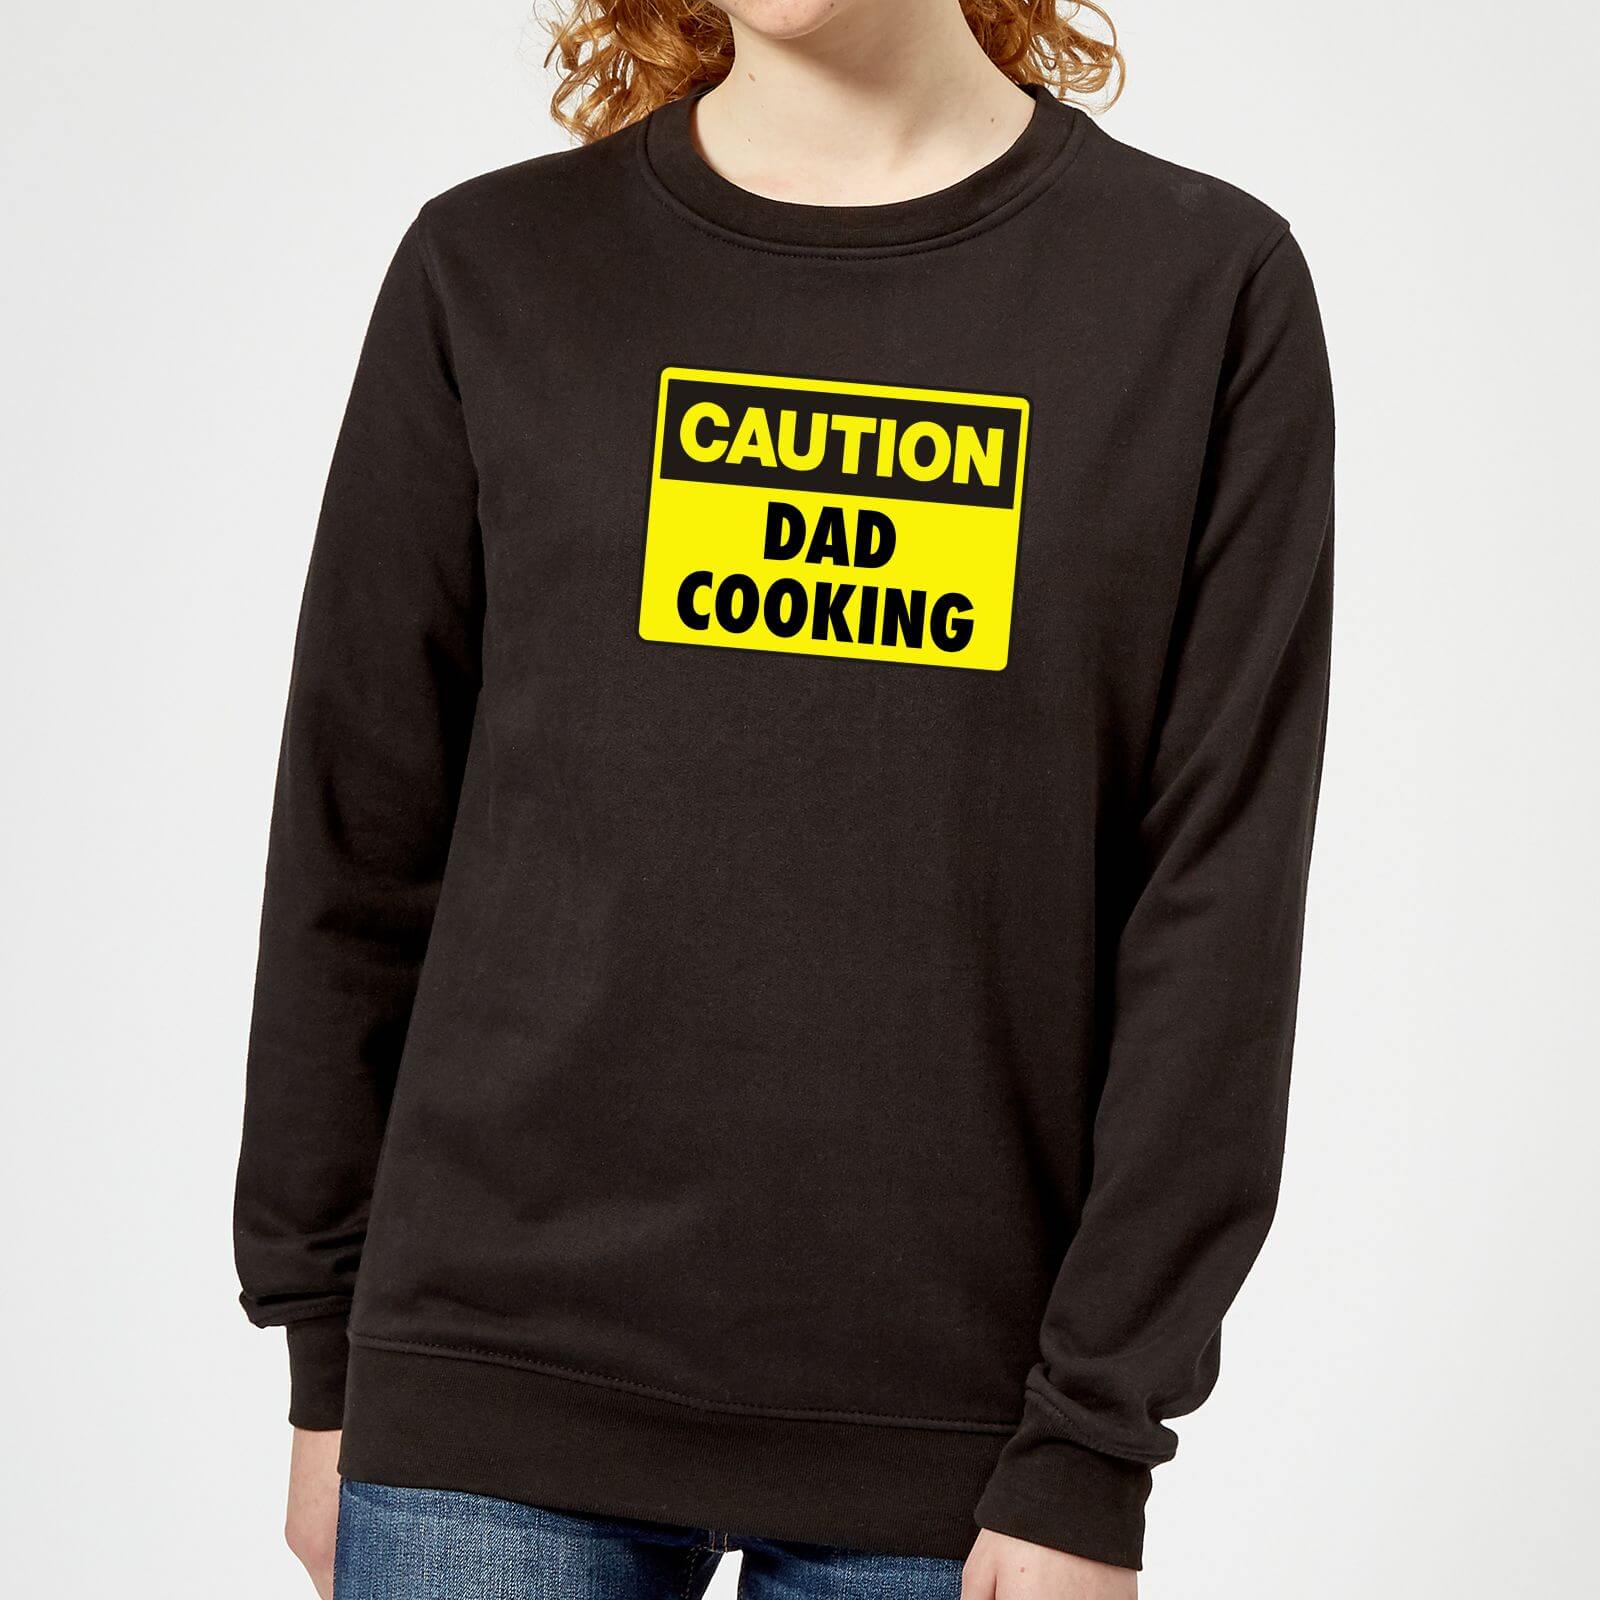 Caution Dad Cooking - Black Womens Sweatshirt - M - Black